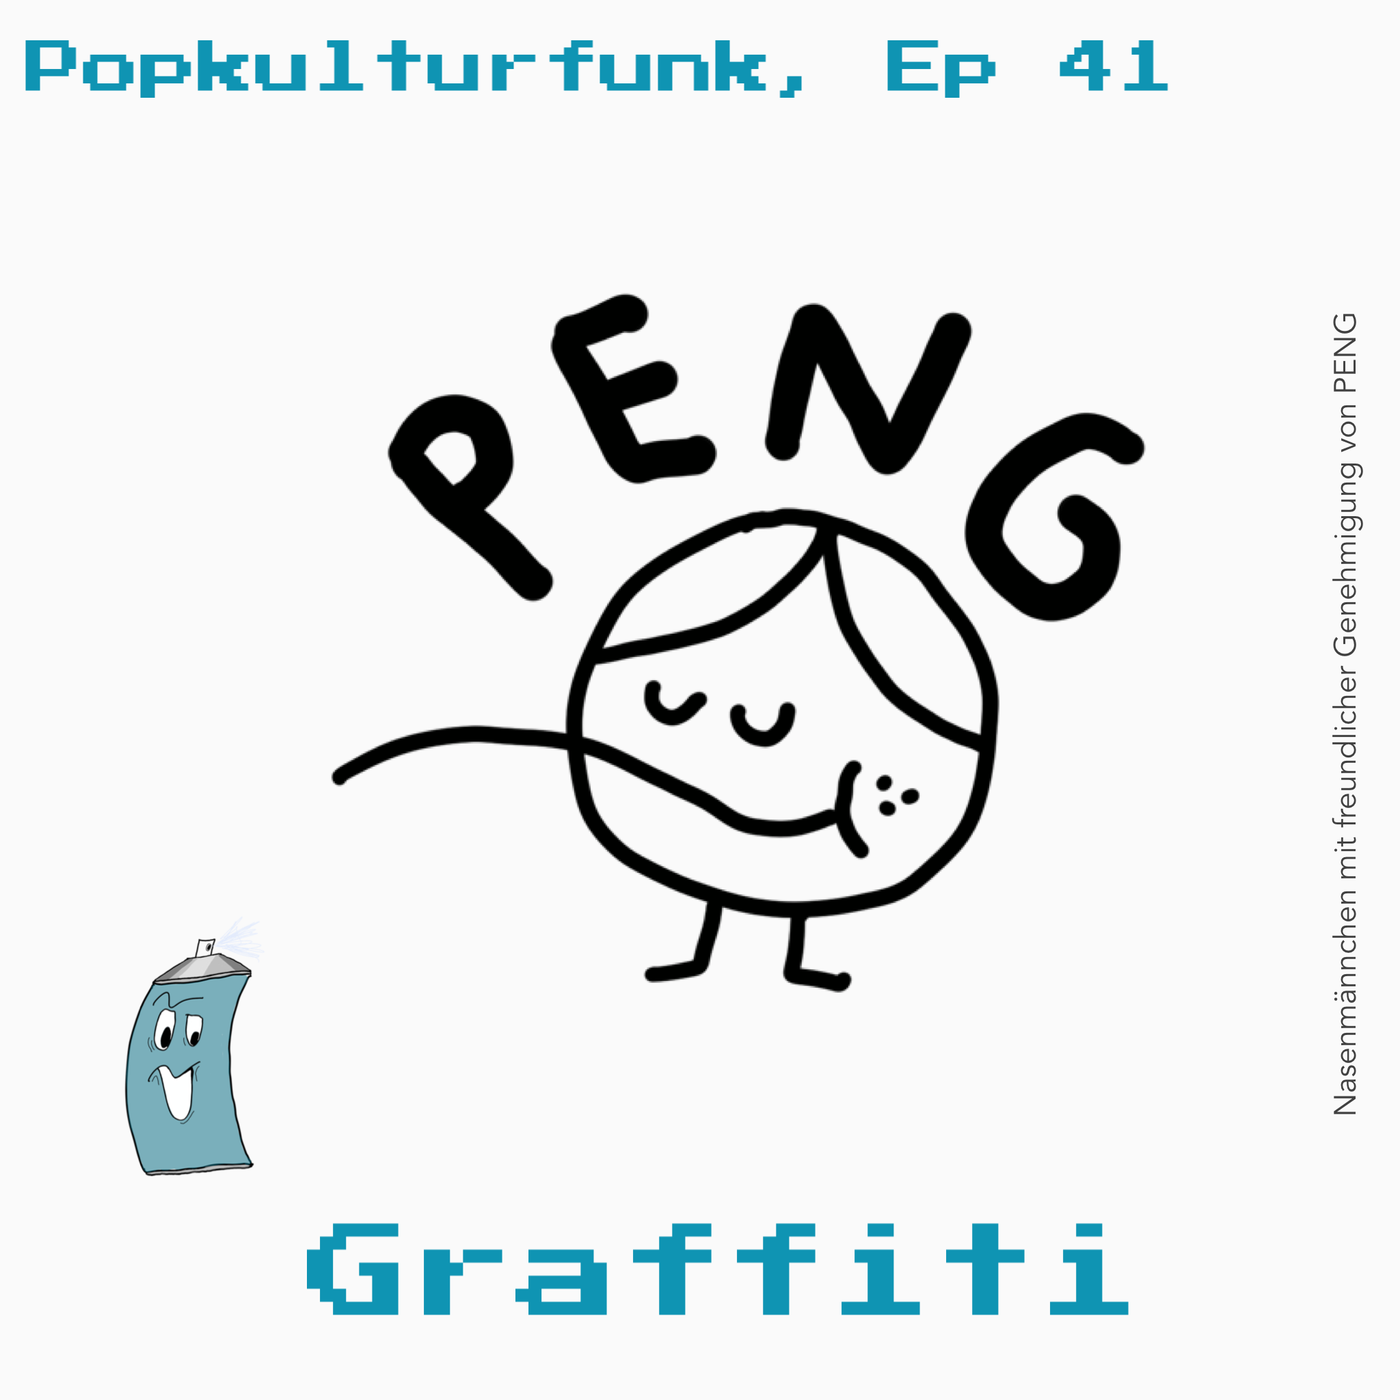 Episode 41: Graffiti